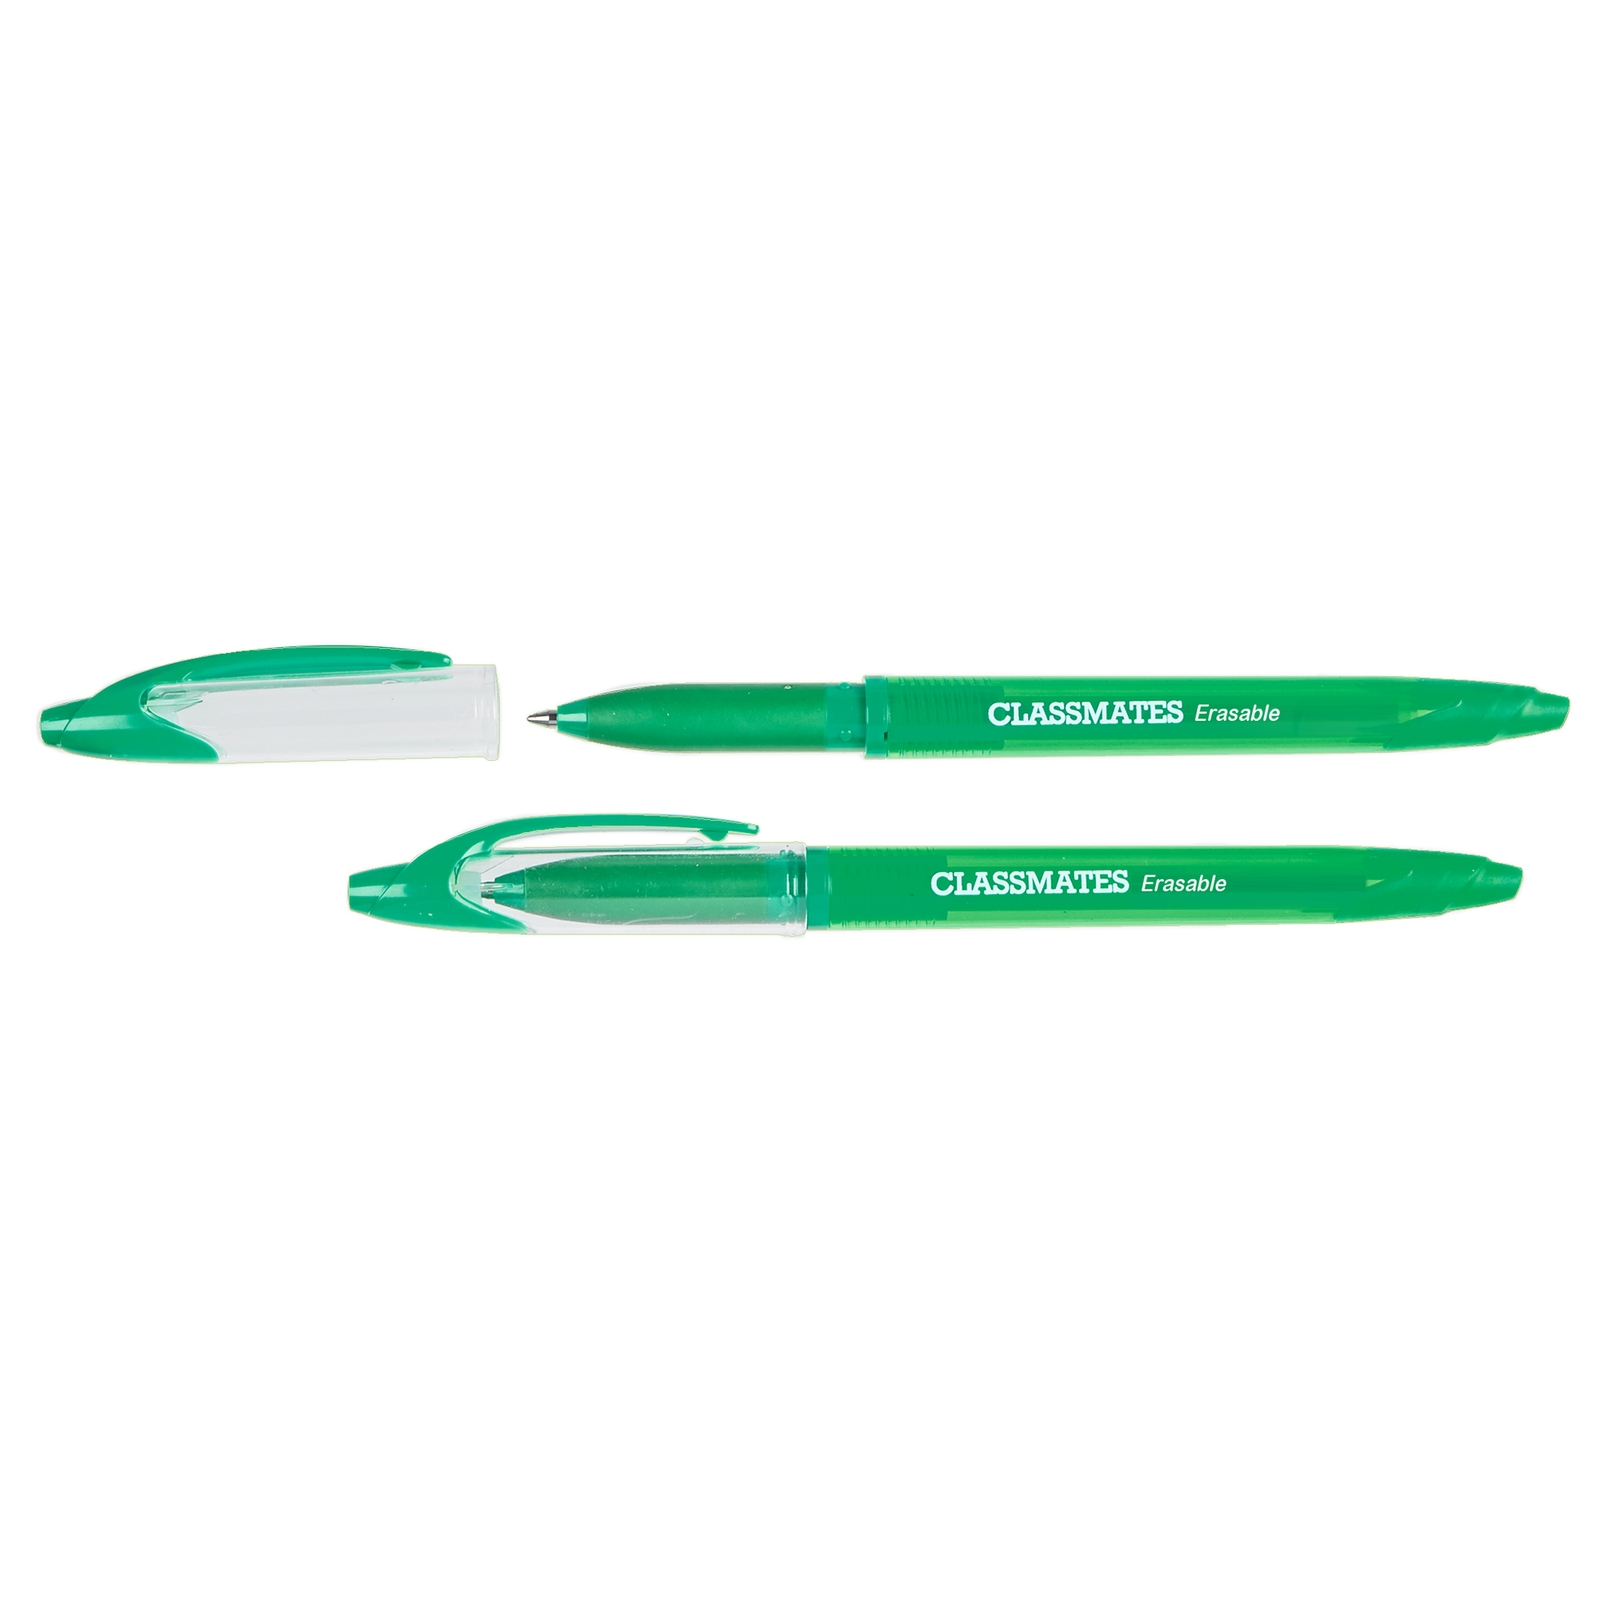 Classmates Erasable Rollerball Pen - Green, Pack of 12